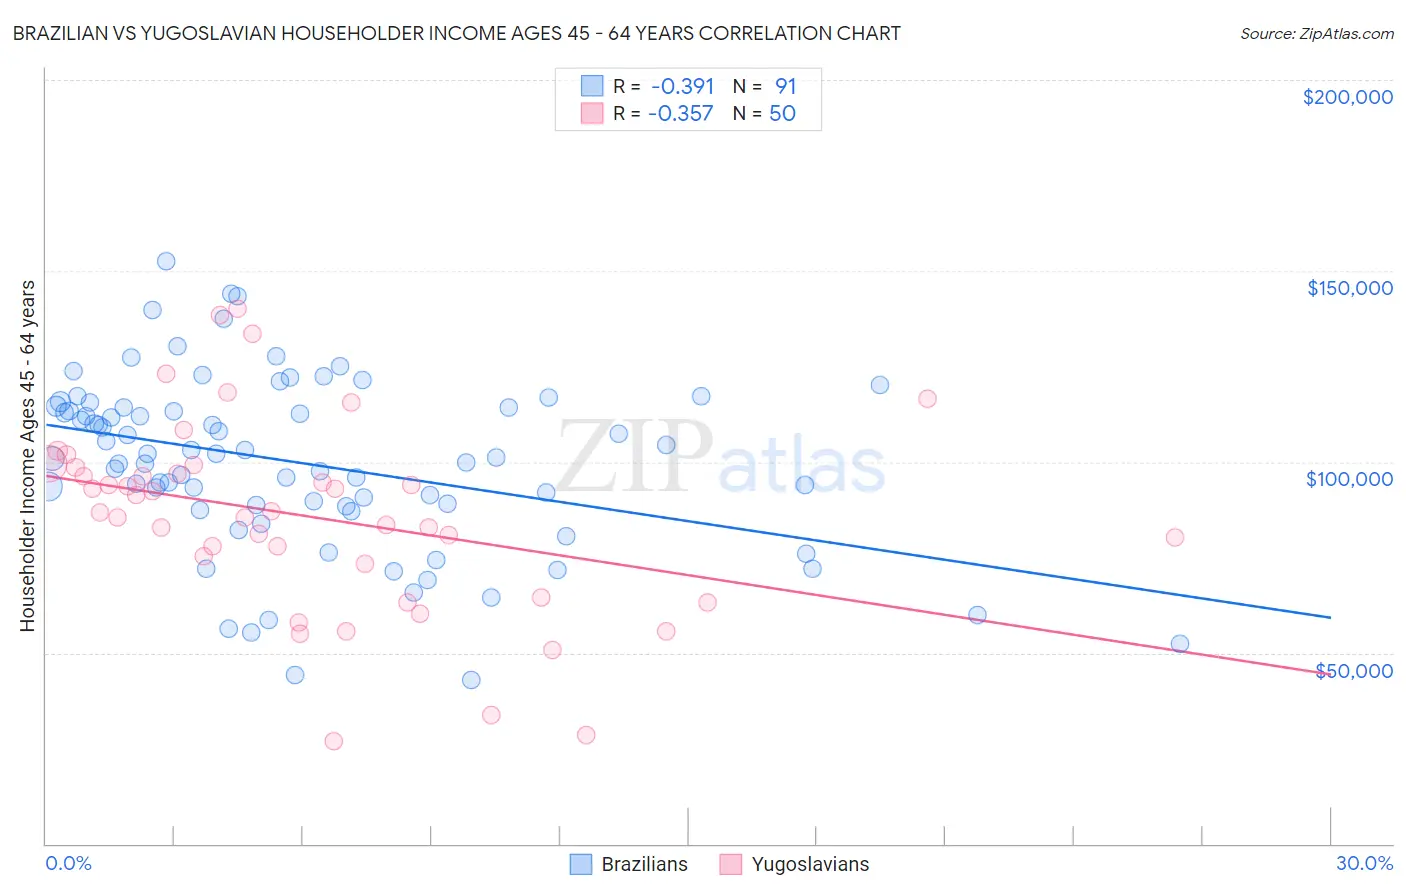 Brazilian vs Yugoslavian Householder Income Ages 45 - 64 years